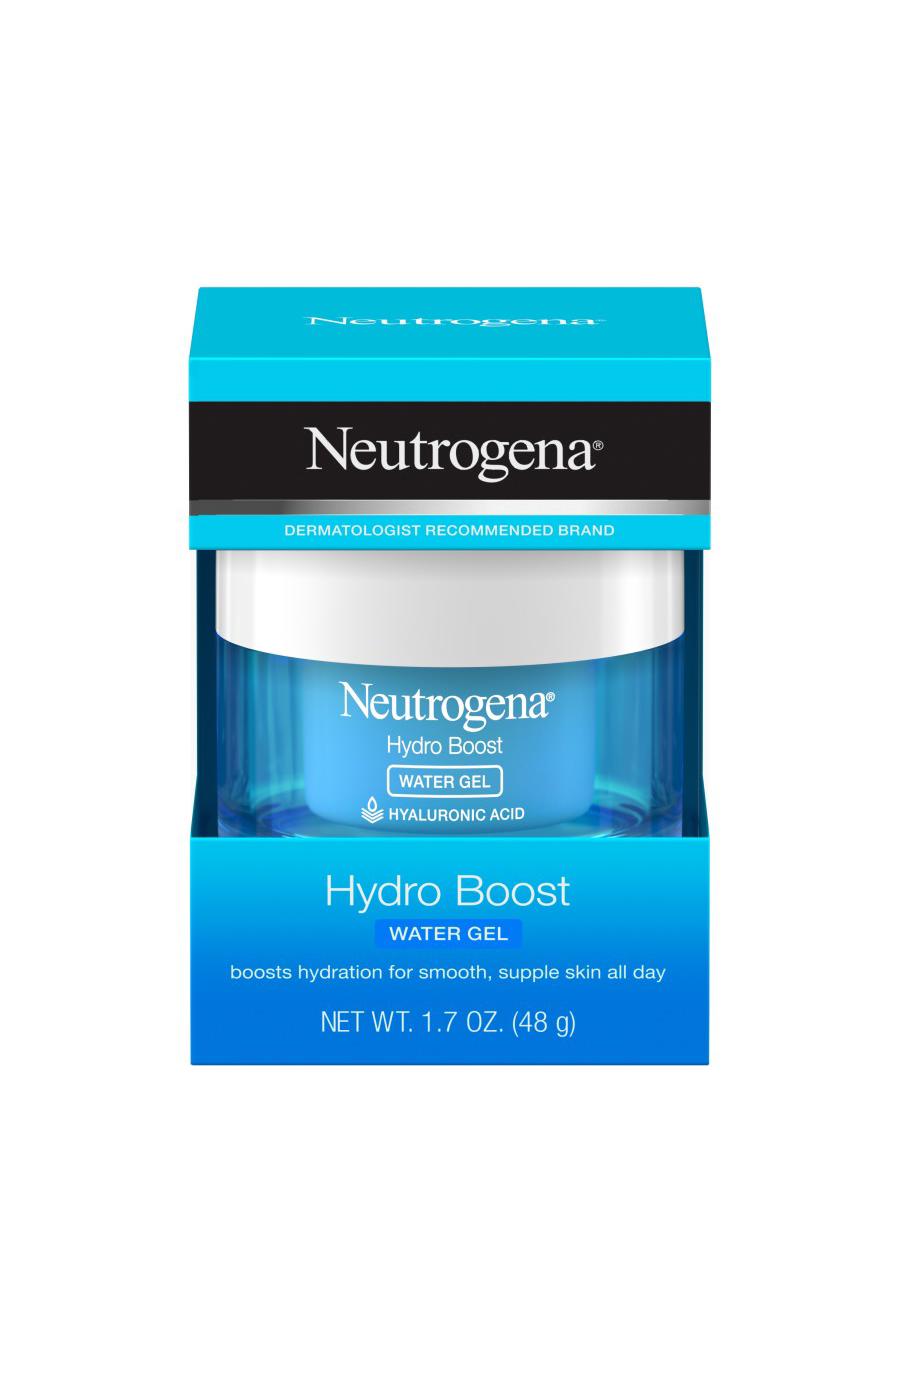 Neutrogena Hydro Boost Water Gel Moisturizer; image 1 of 7